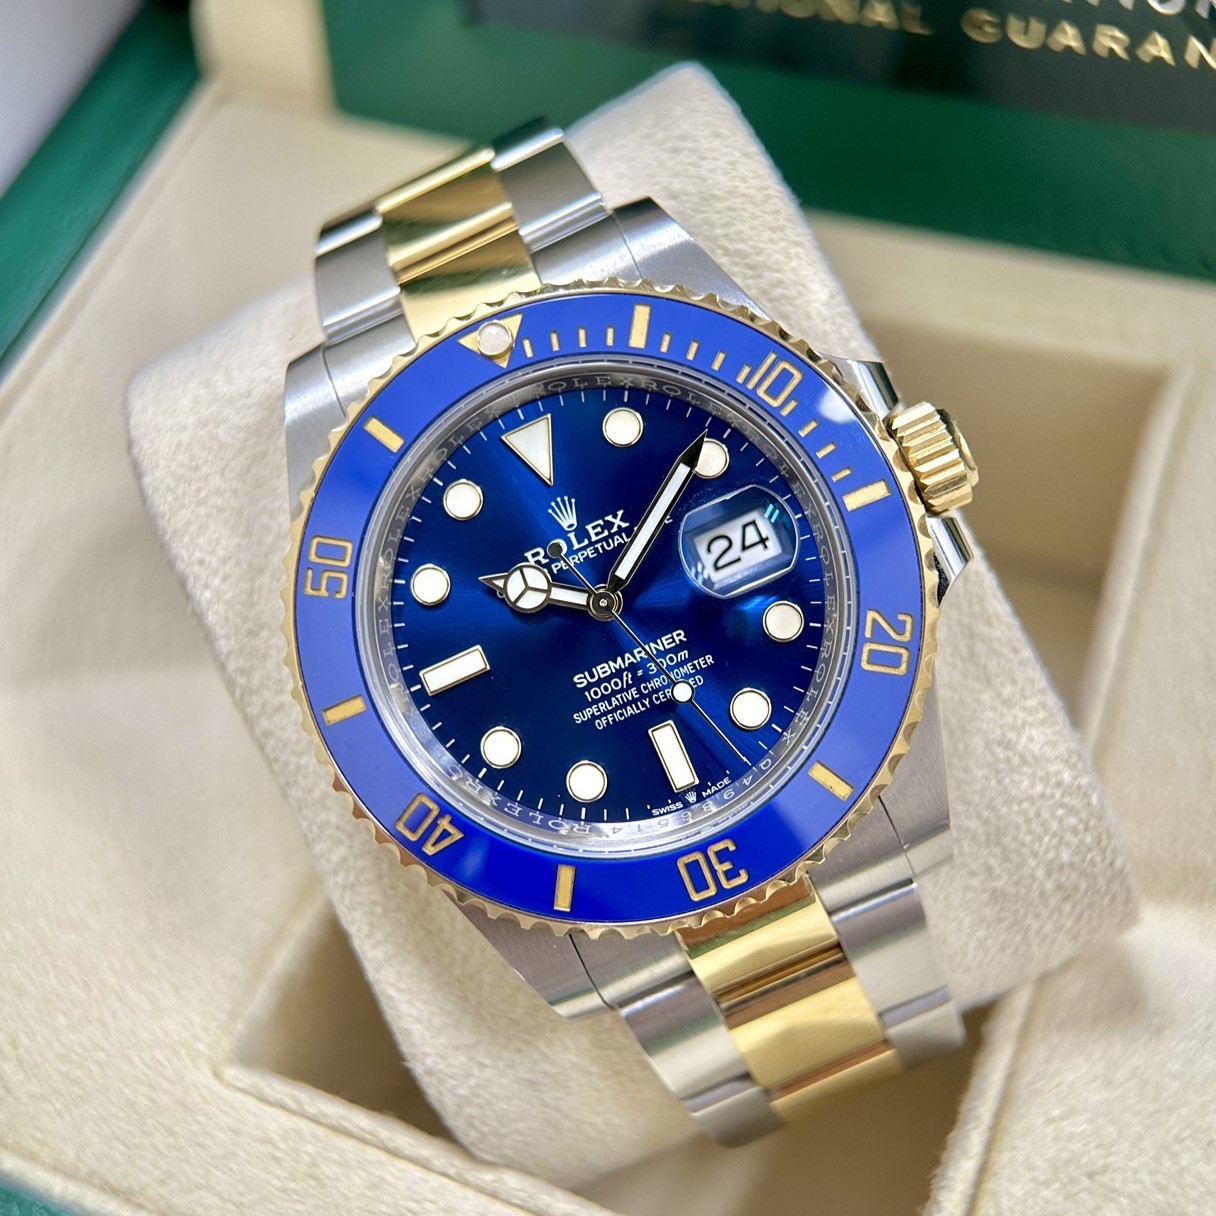 Đồng hồ Rolex Submariner Date 126613LB Fullbox năm 2021